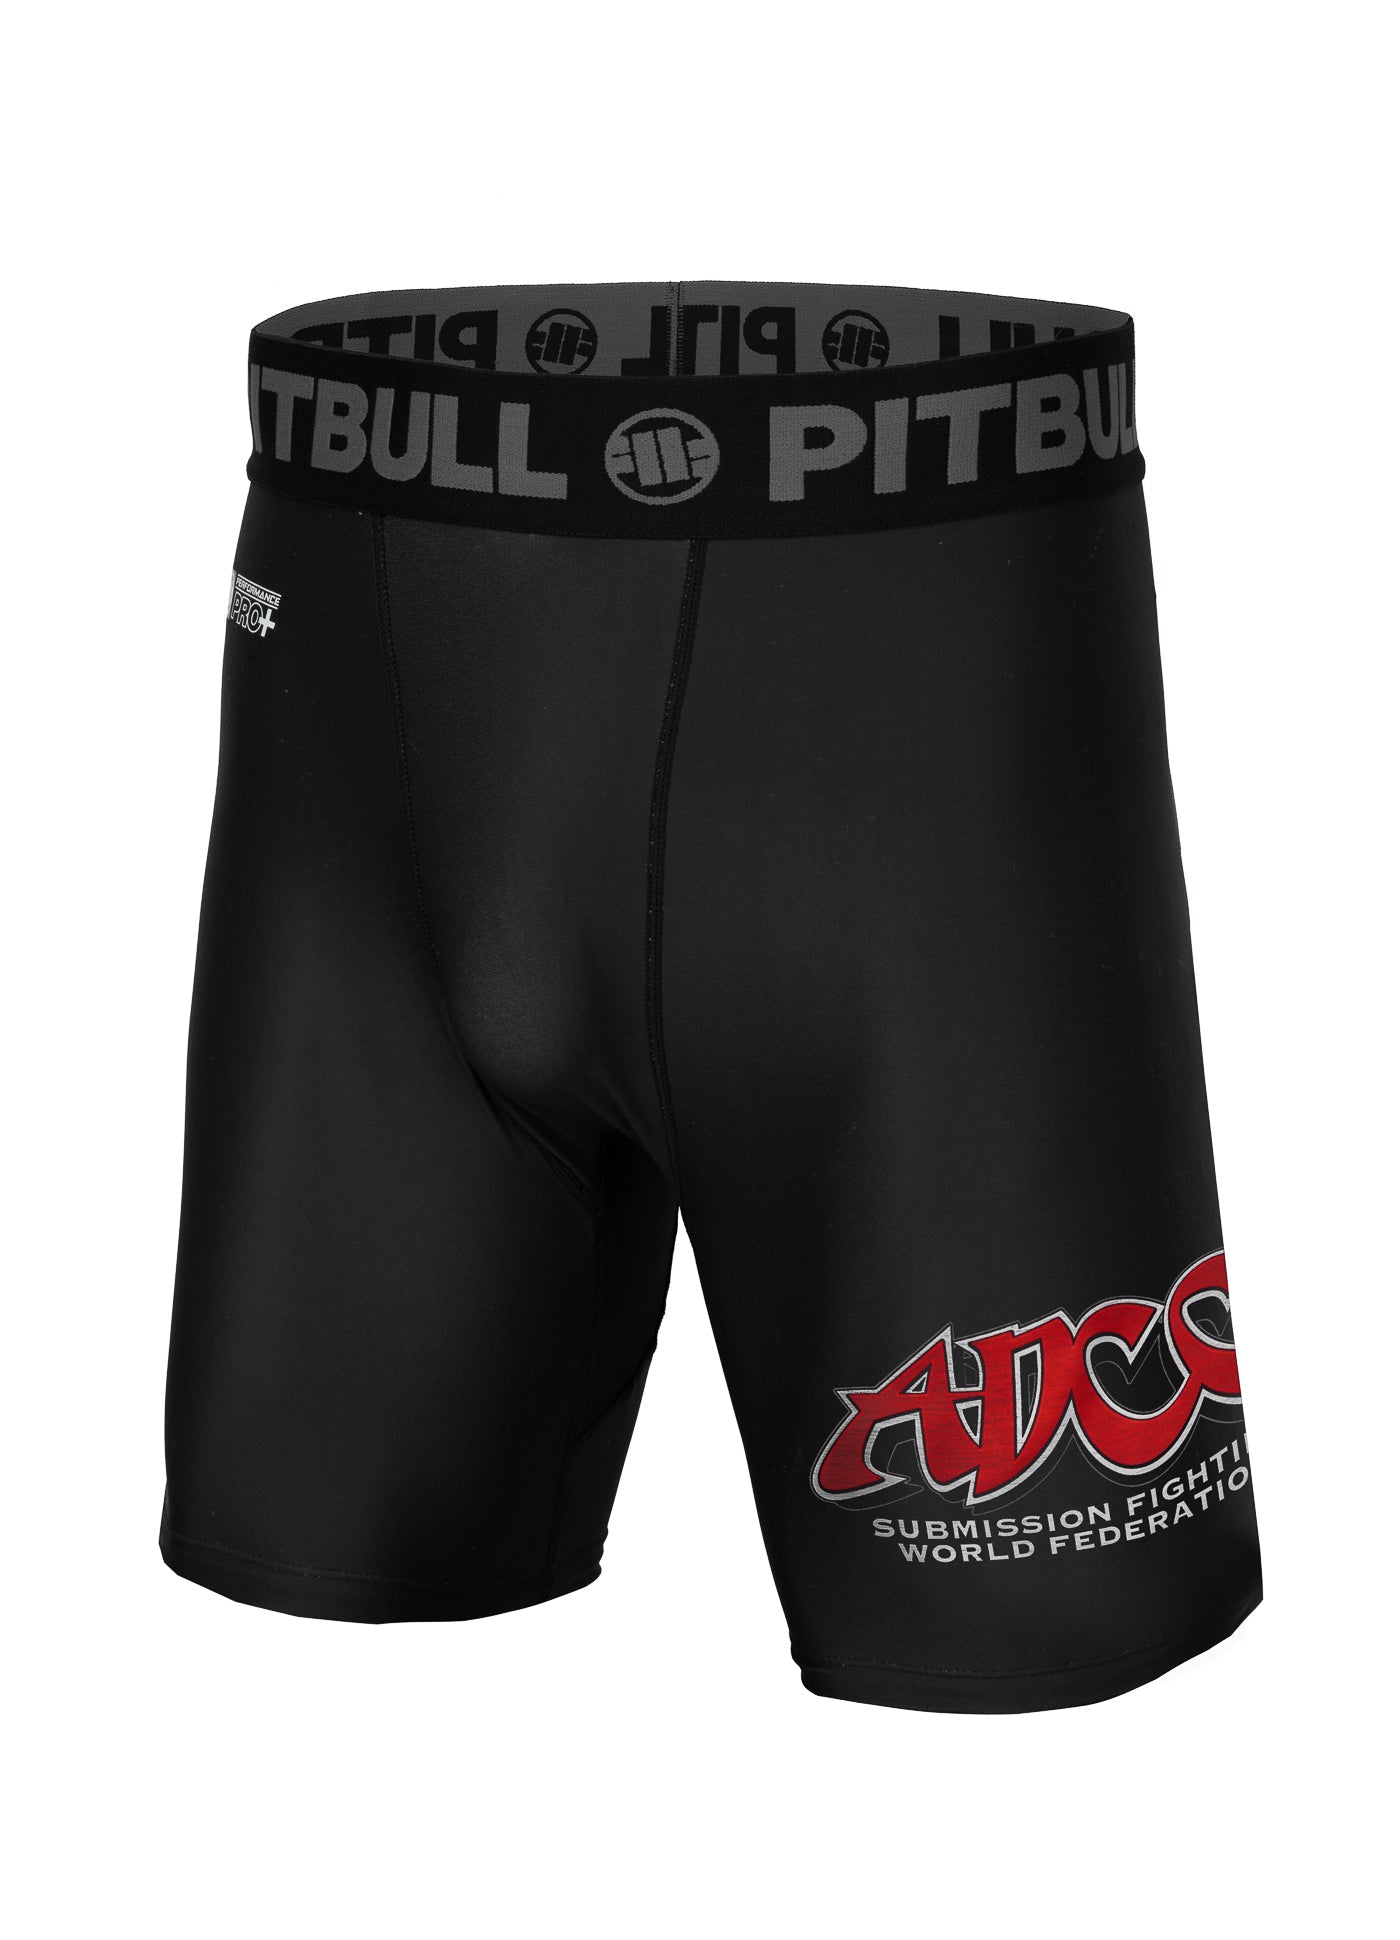 ADCC 2 Black Compression Shorts